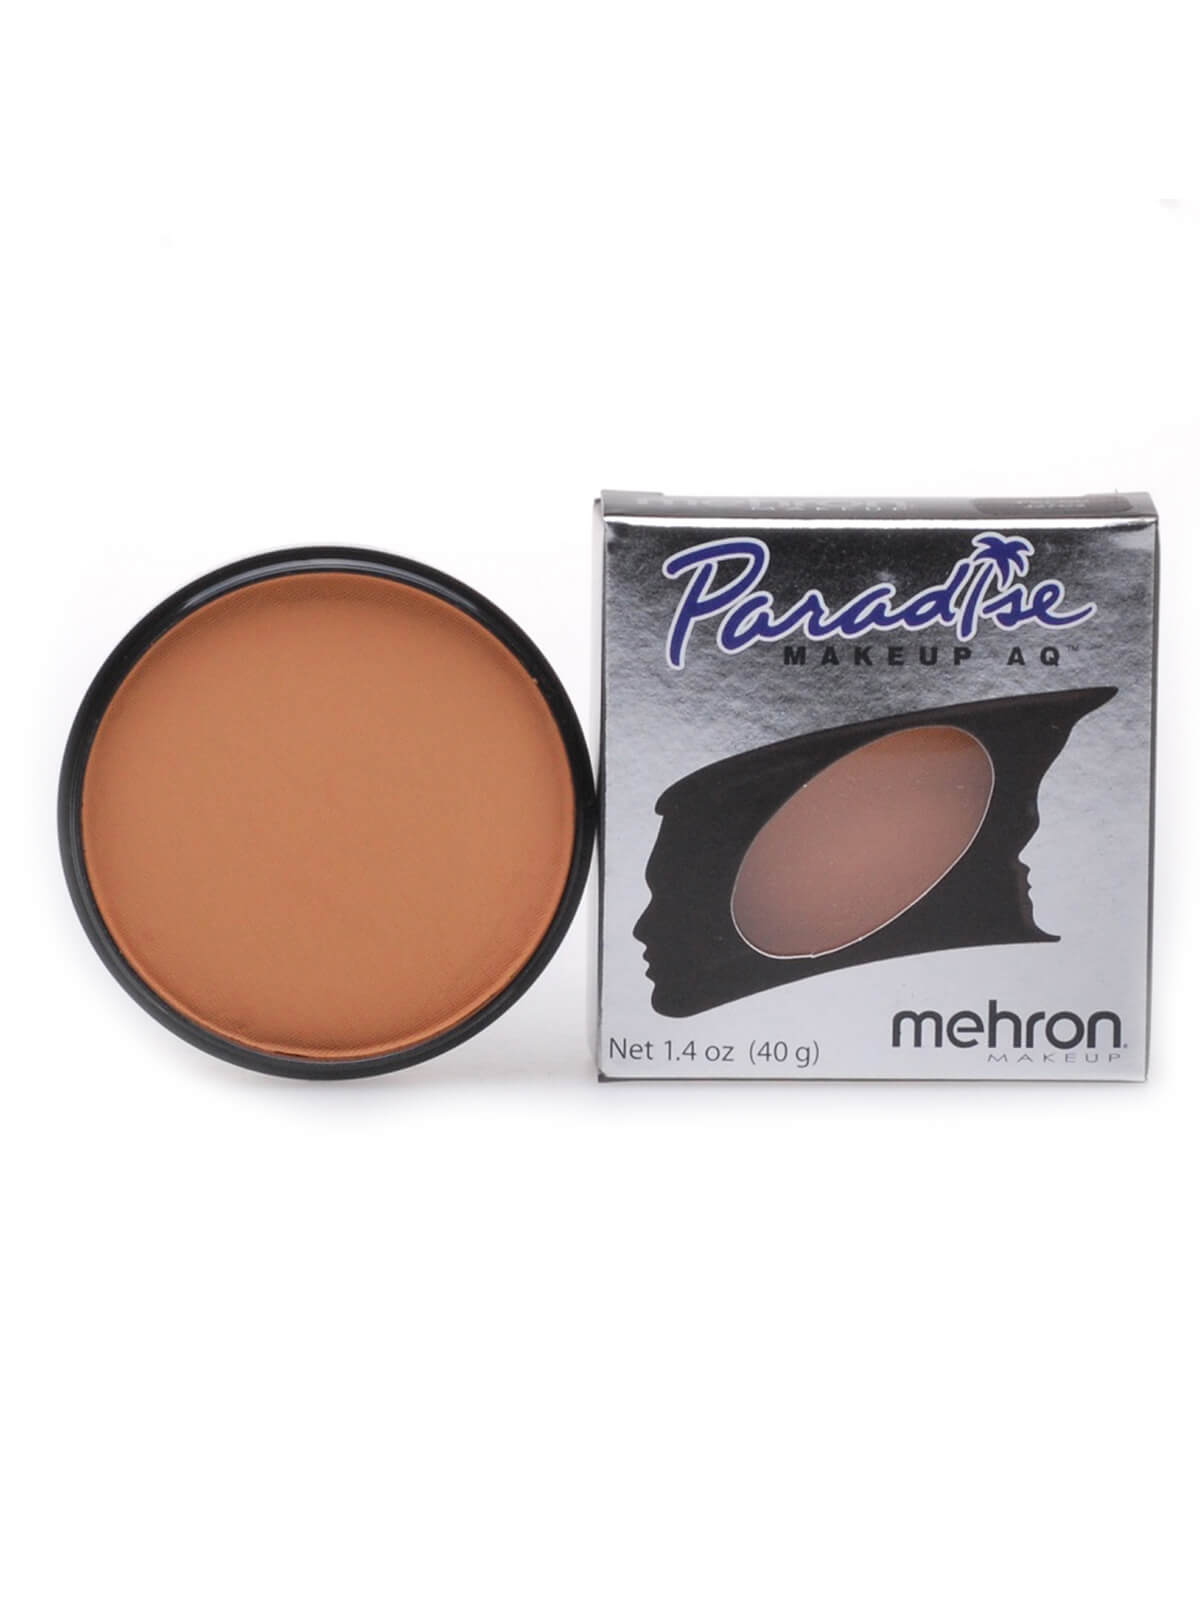 Mehron Paradise Makeup AQ - Nuance - Felou